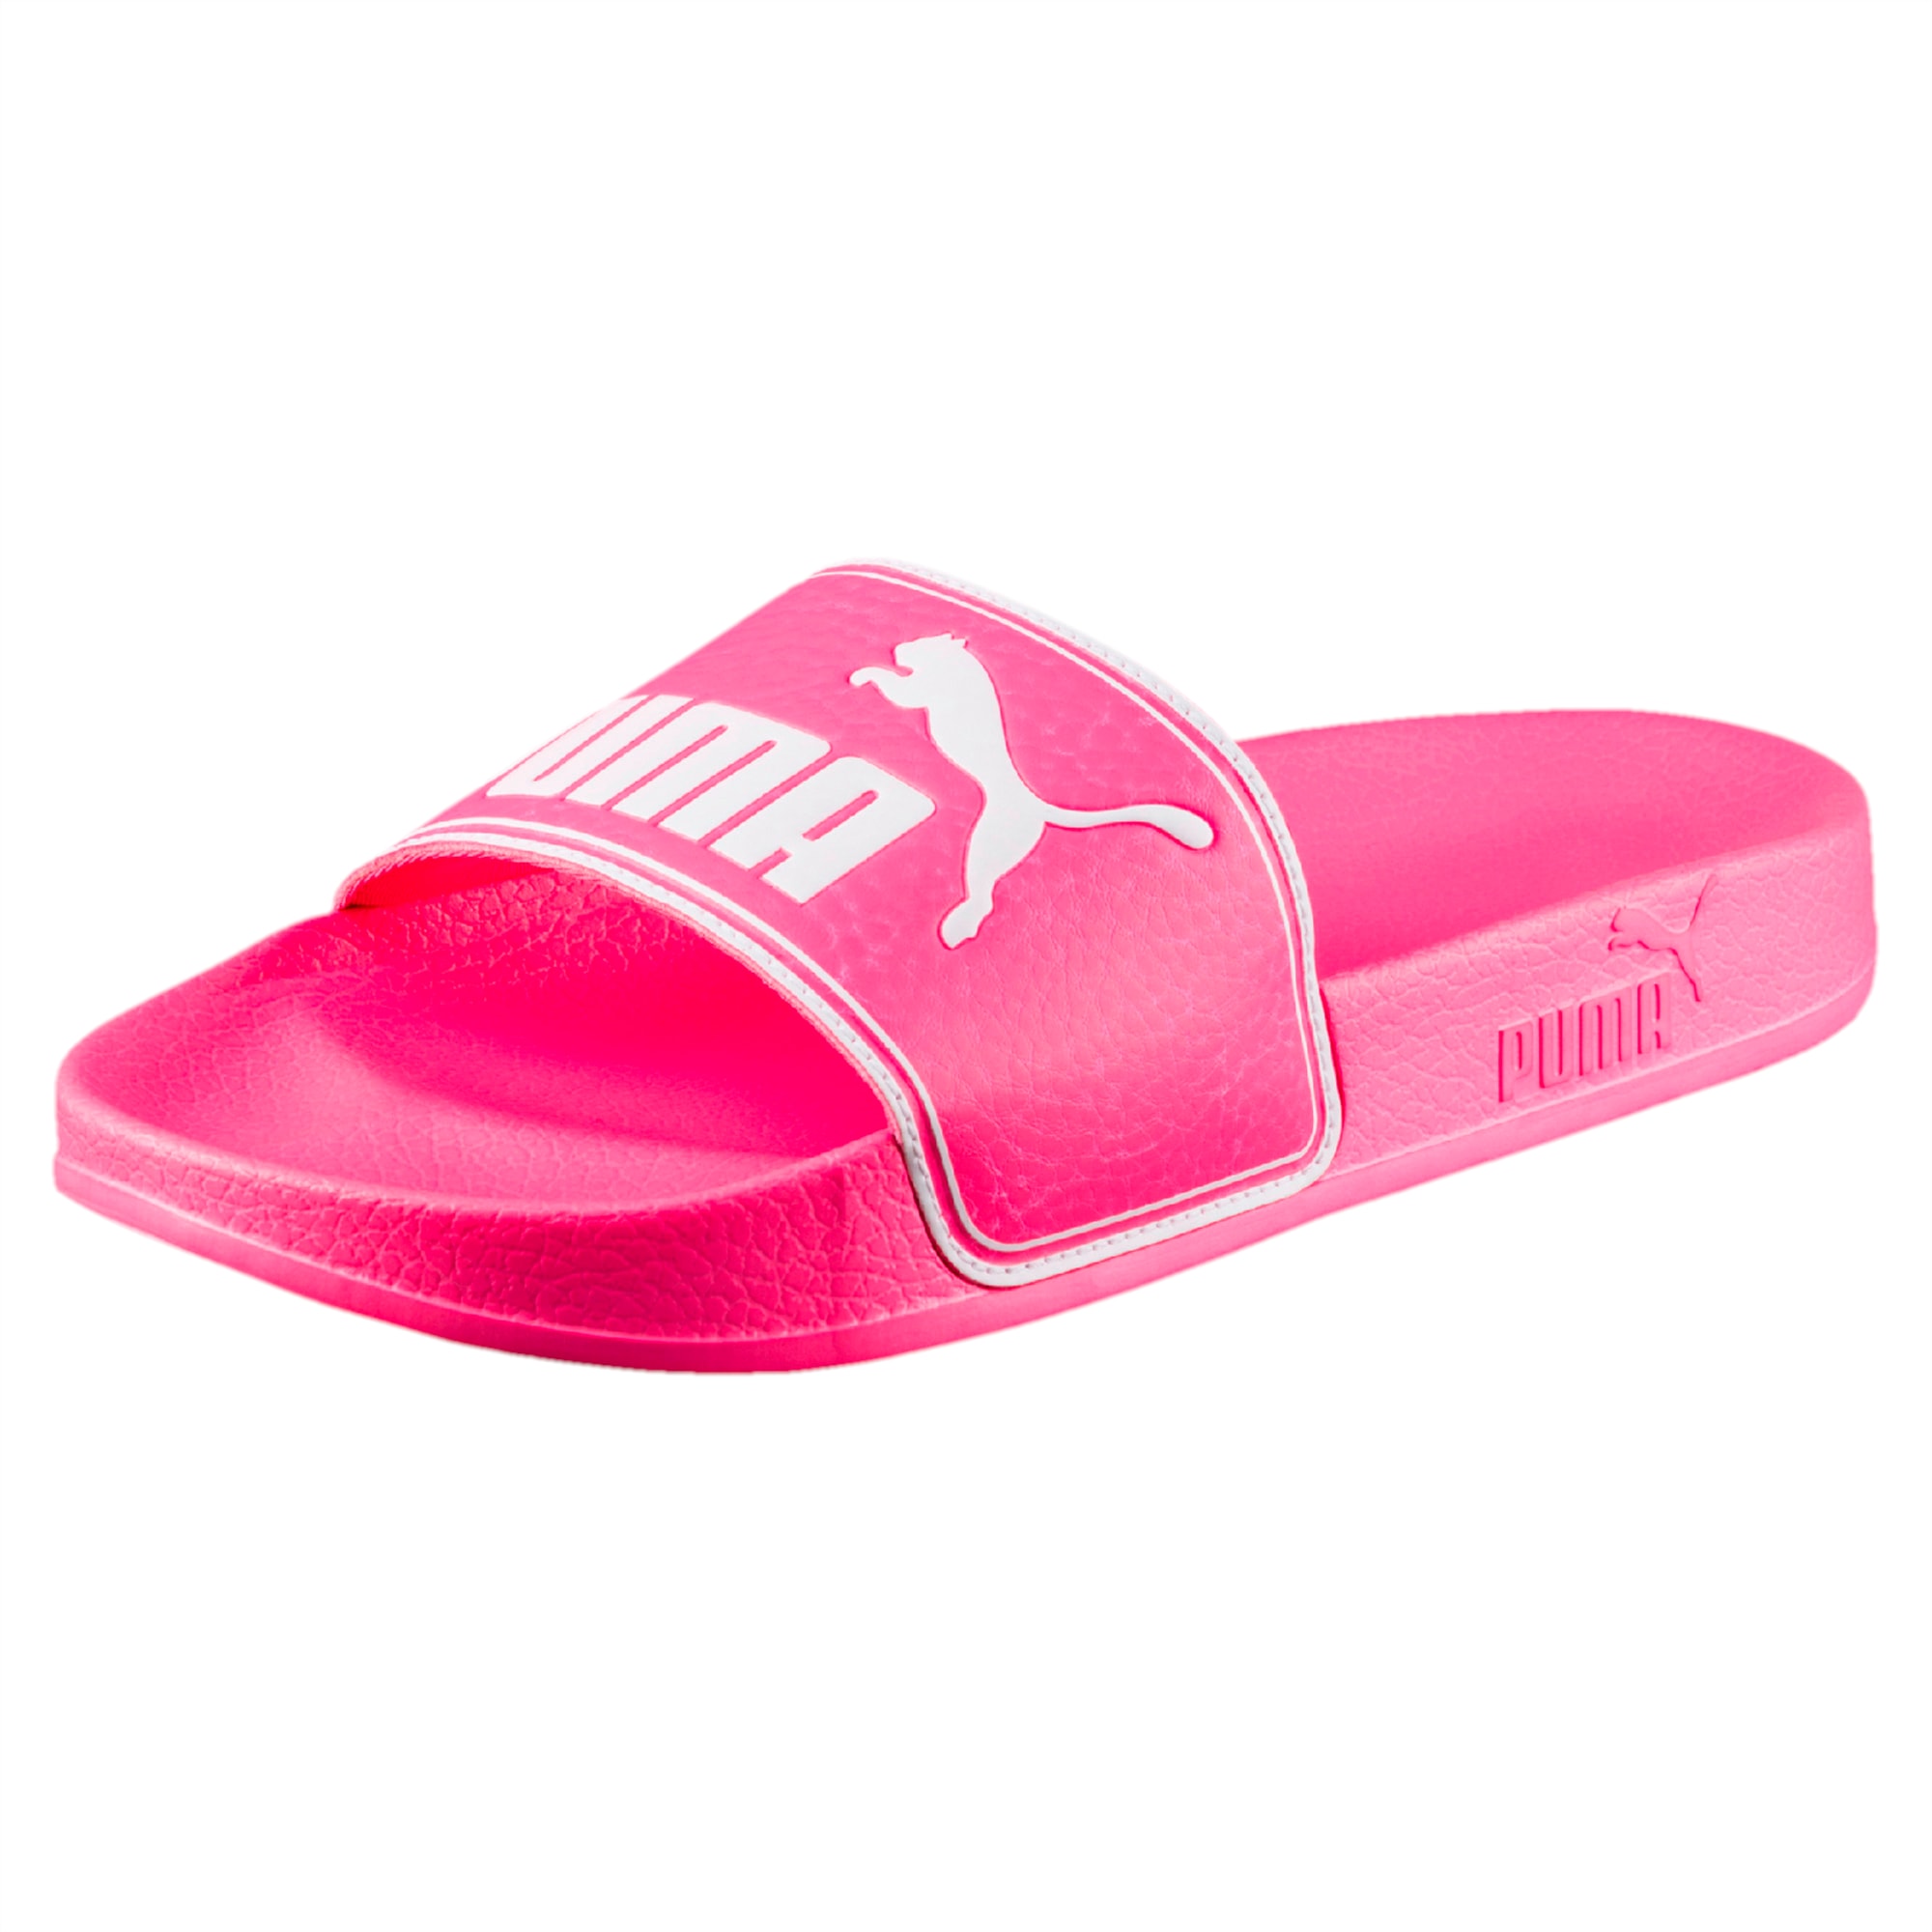 pink puma flip flops